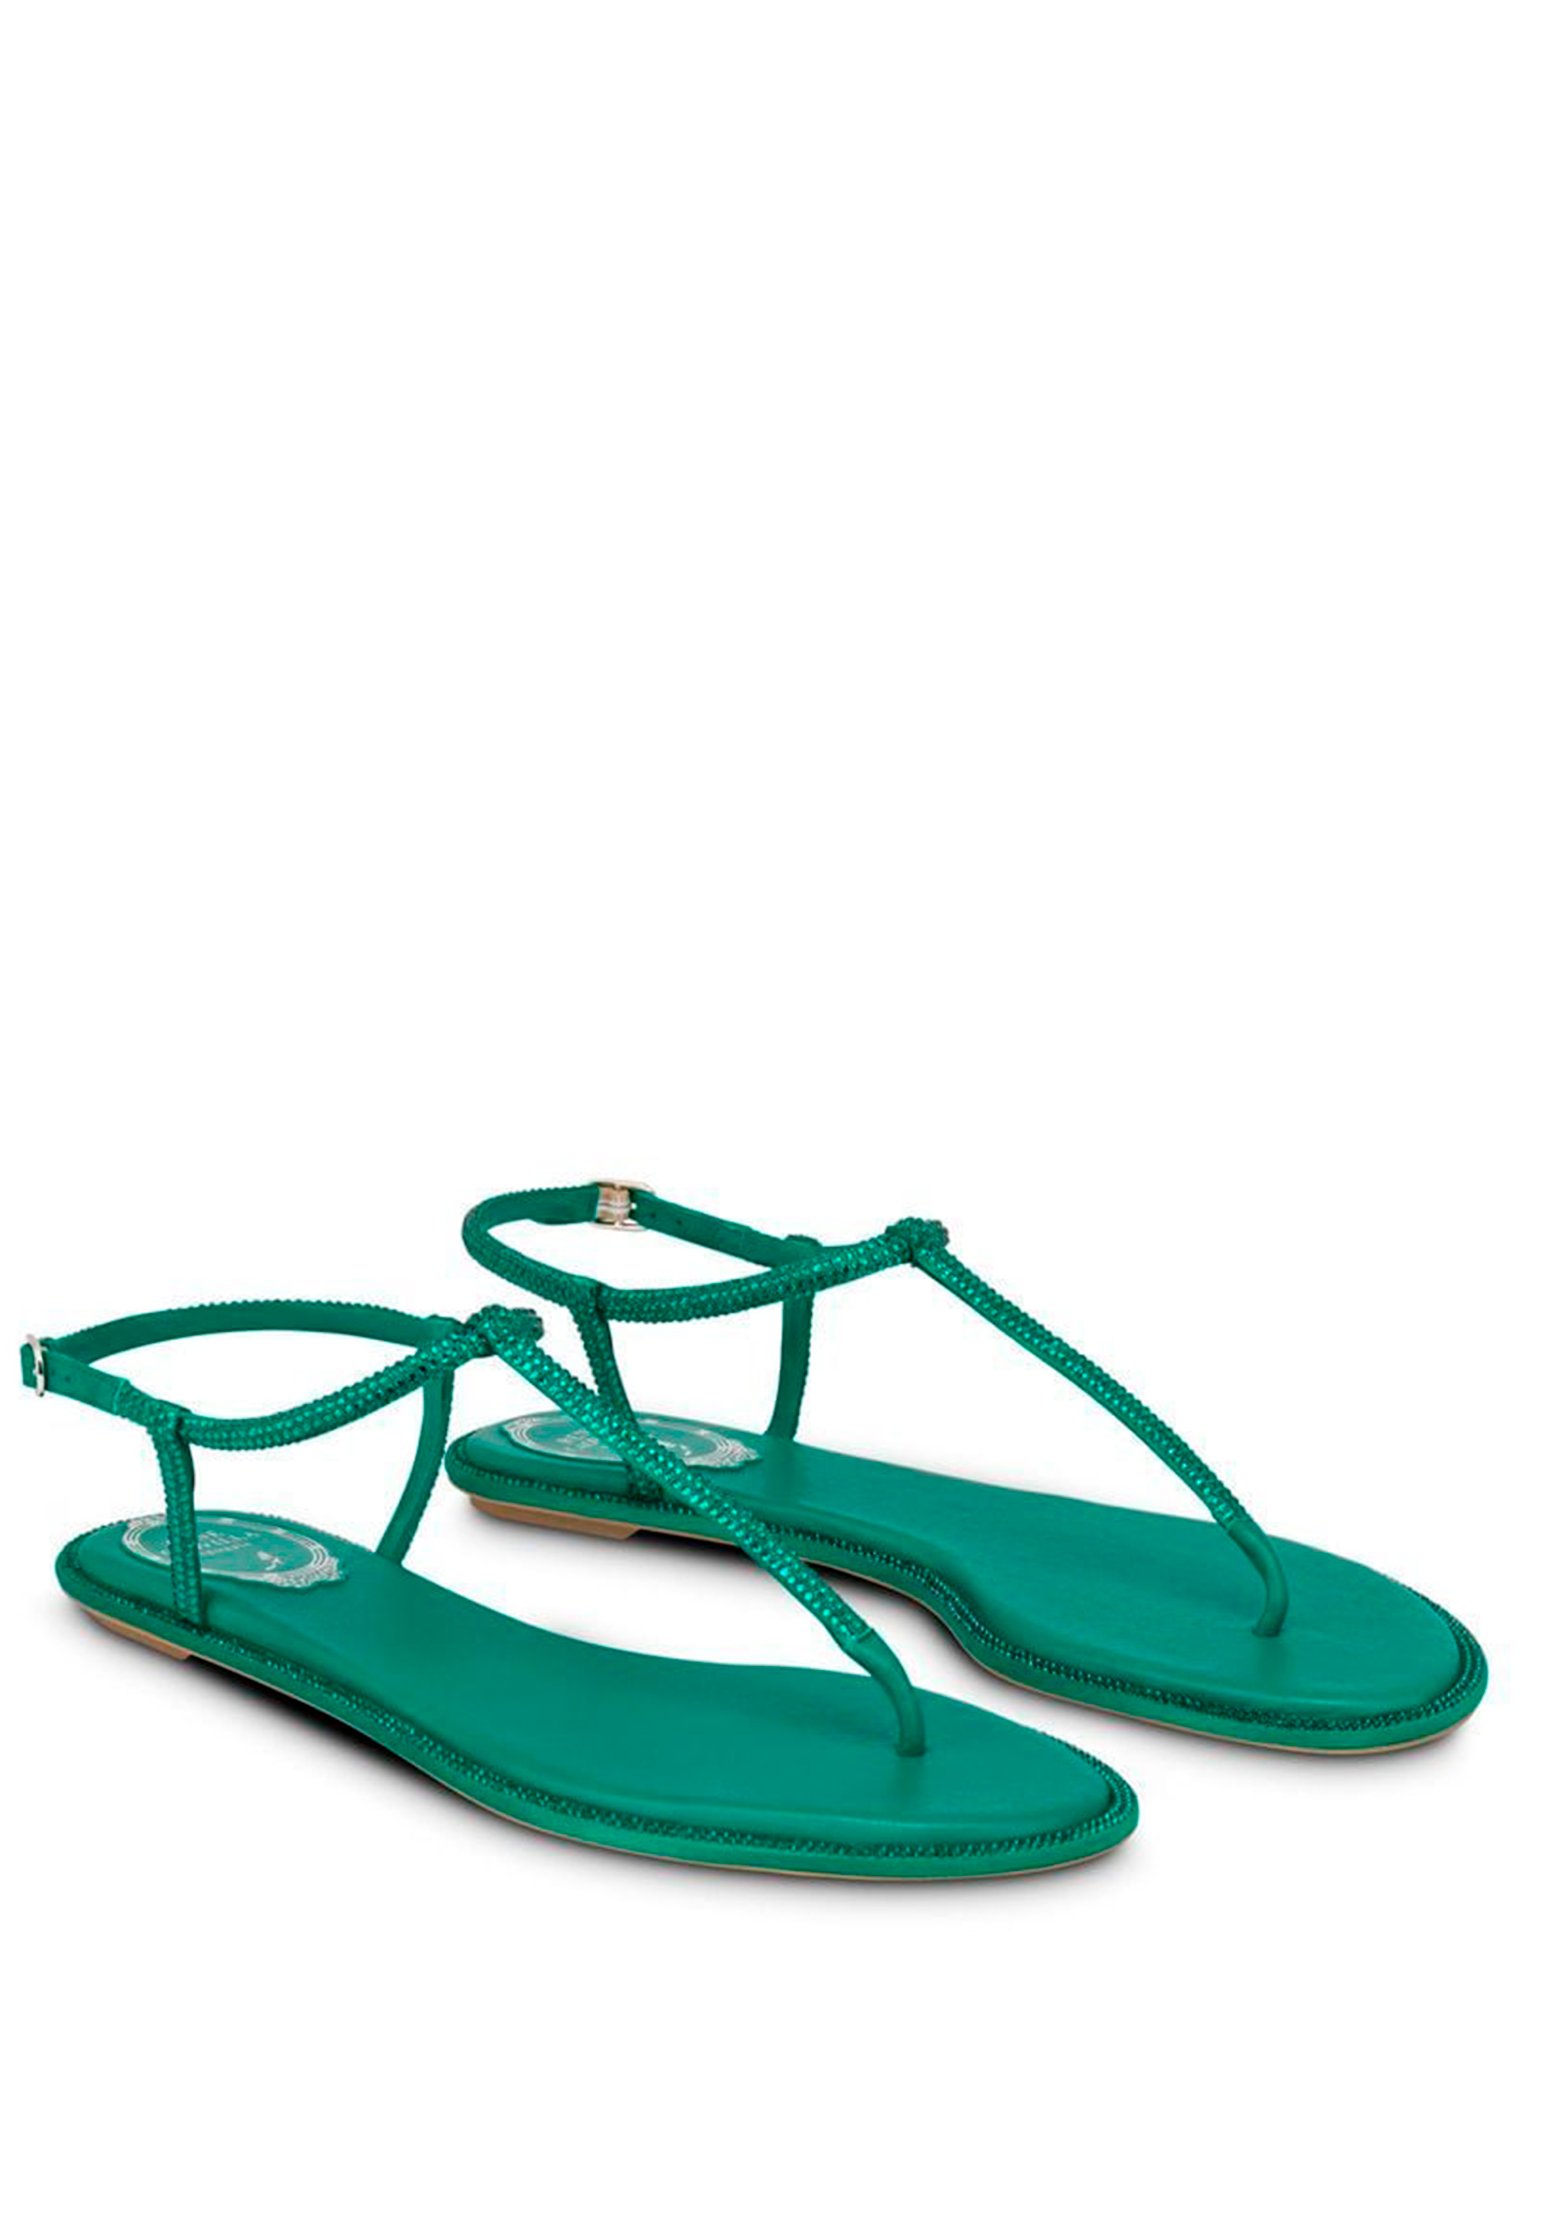 Shoes RENE CAOVILLA Color: green (Code: 2370) in online store Allure